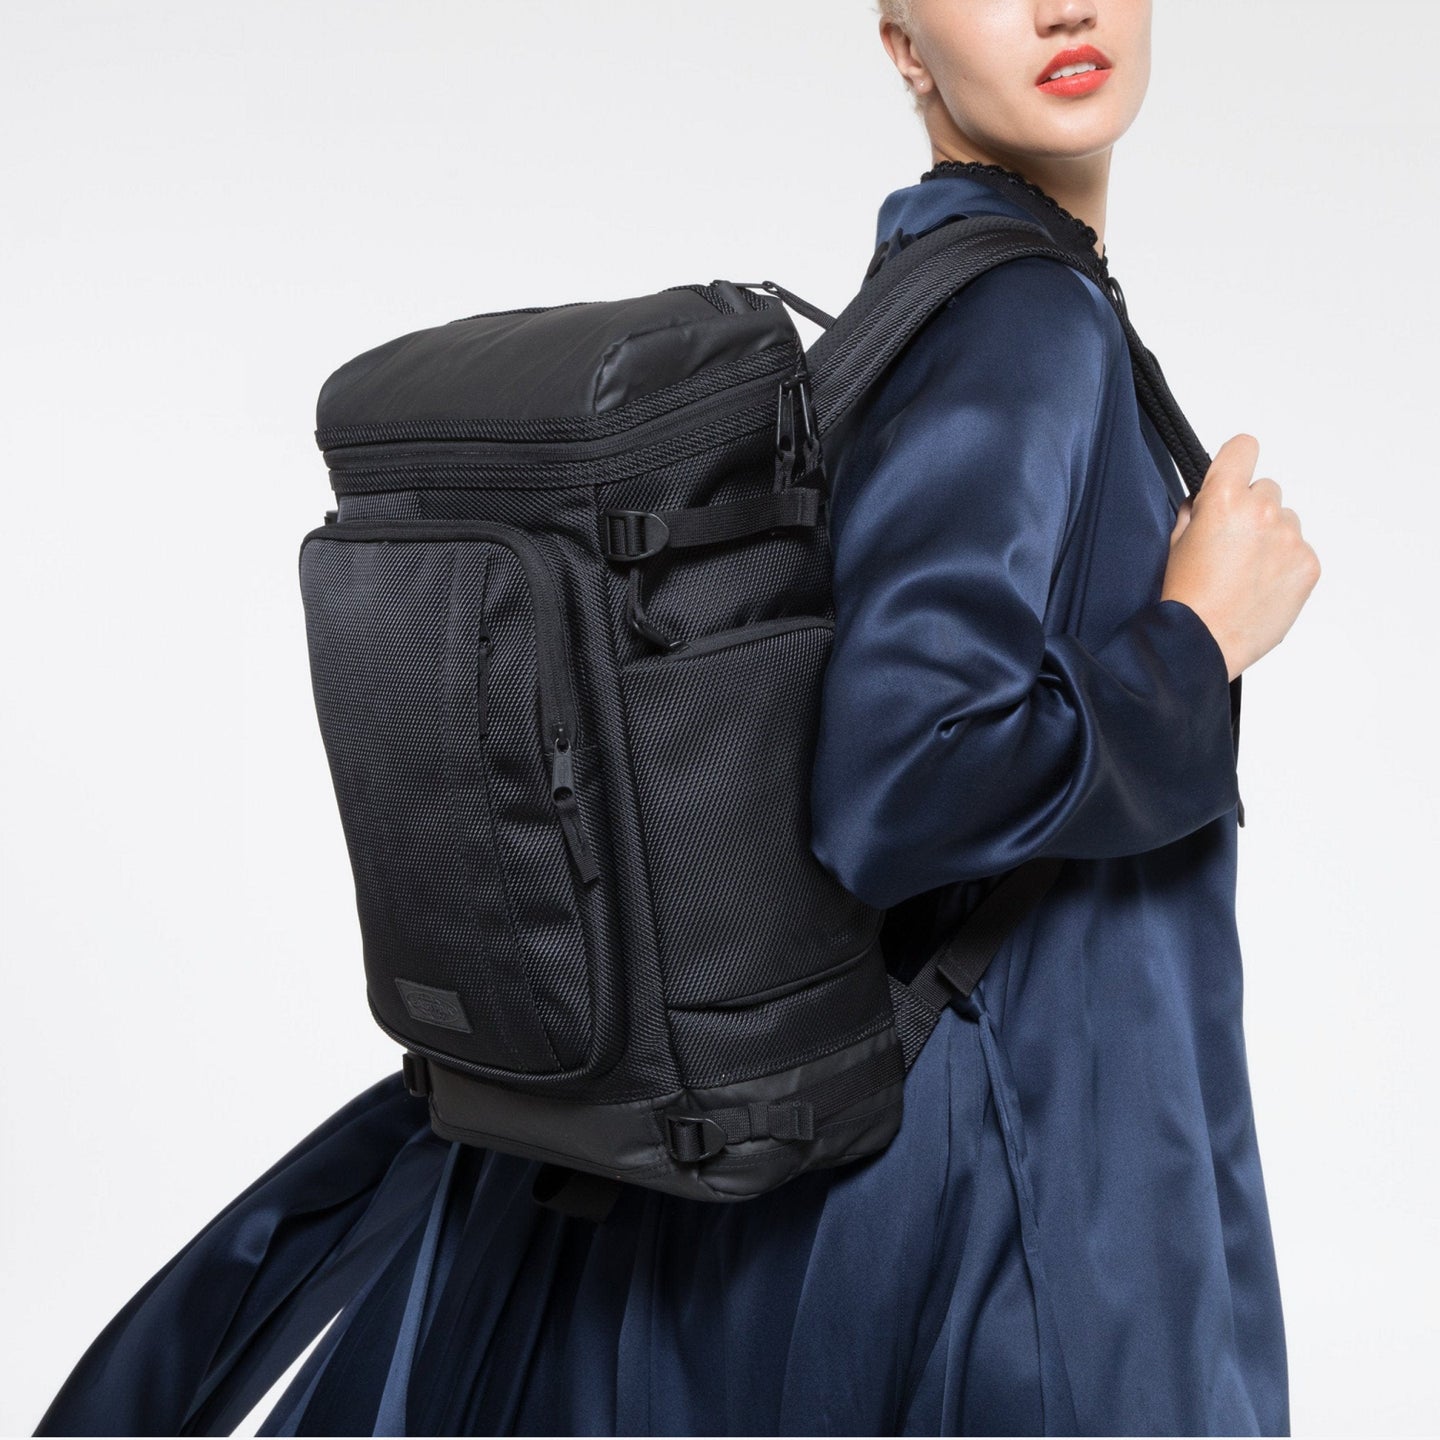 Tecum Top Cnnct Coat Professional Backpack Close Up Of Bag On Model's Back